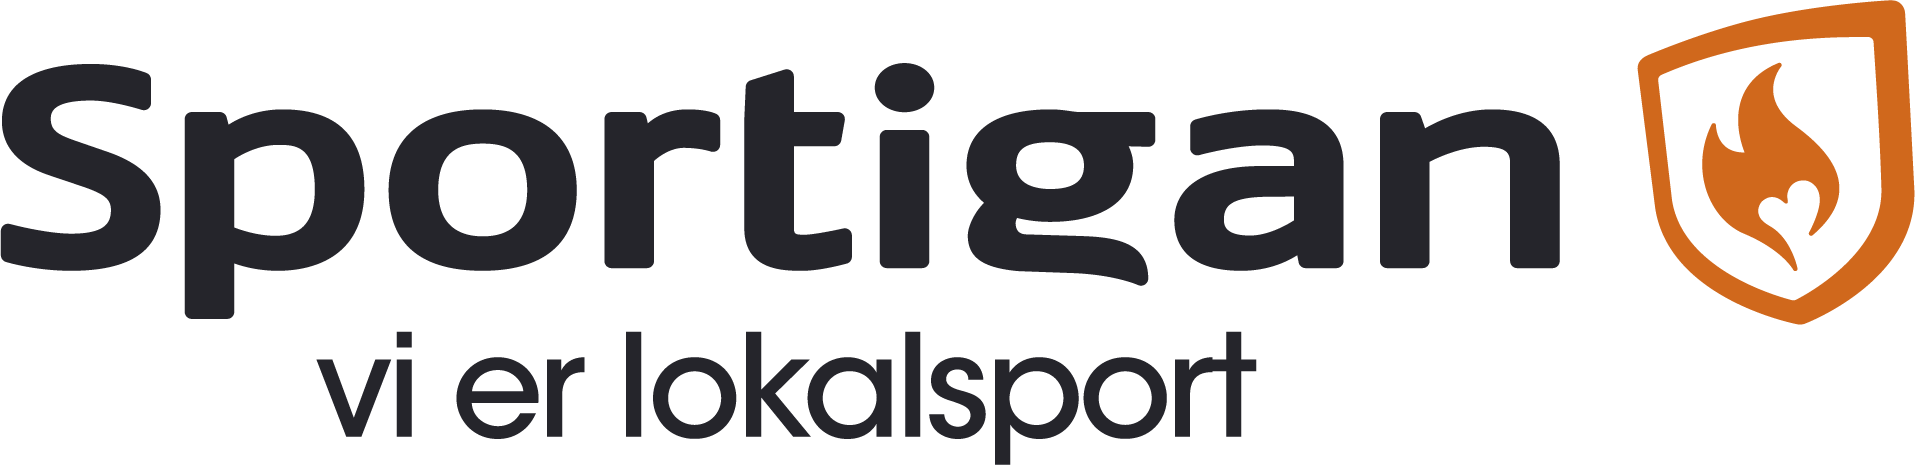 Sportigan_logo_lokalsport_RGB.png